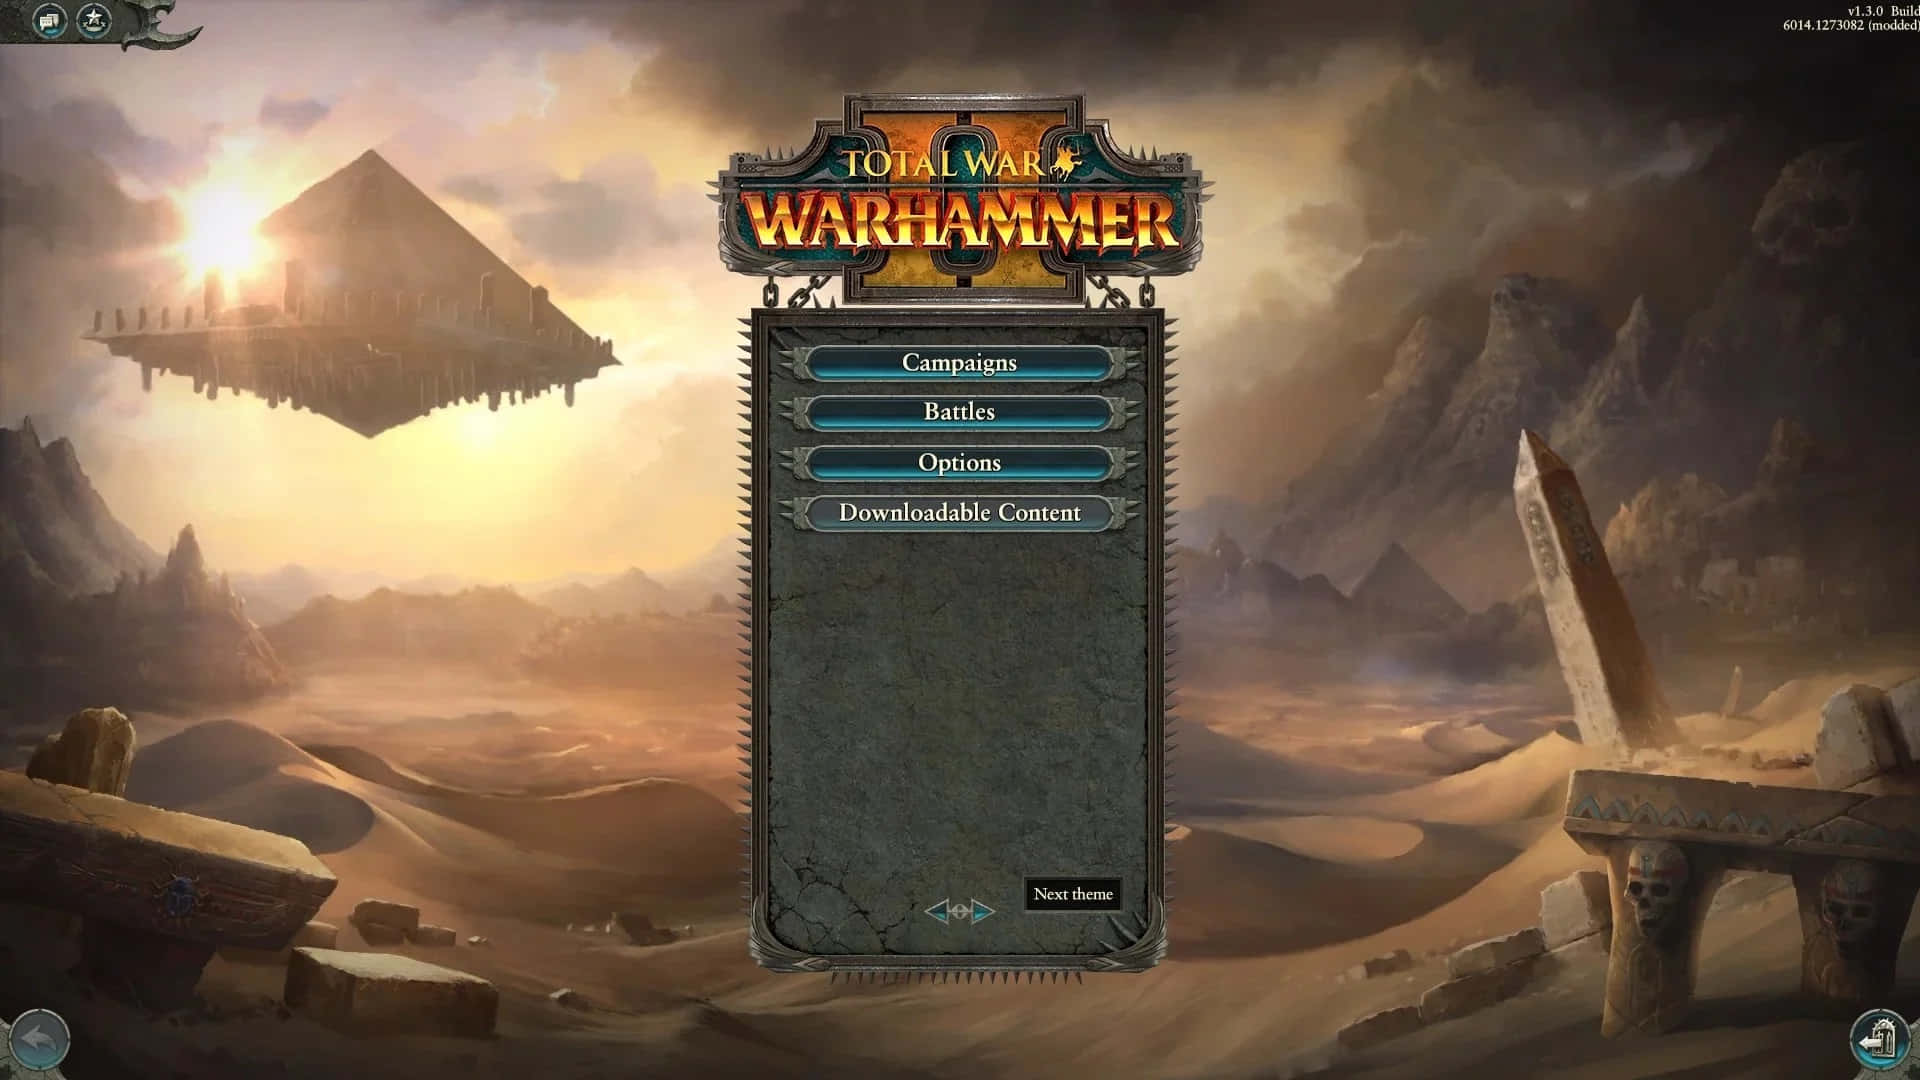 A striking image of a battlefield in the game HD Total War Warhammer II